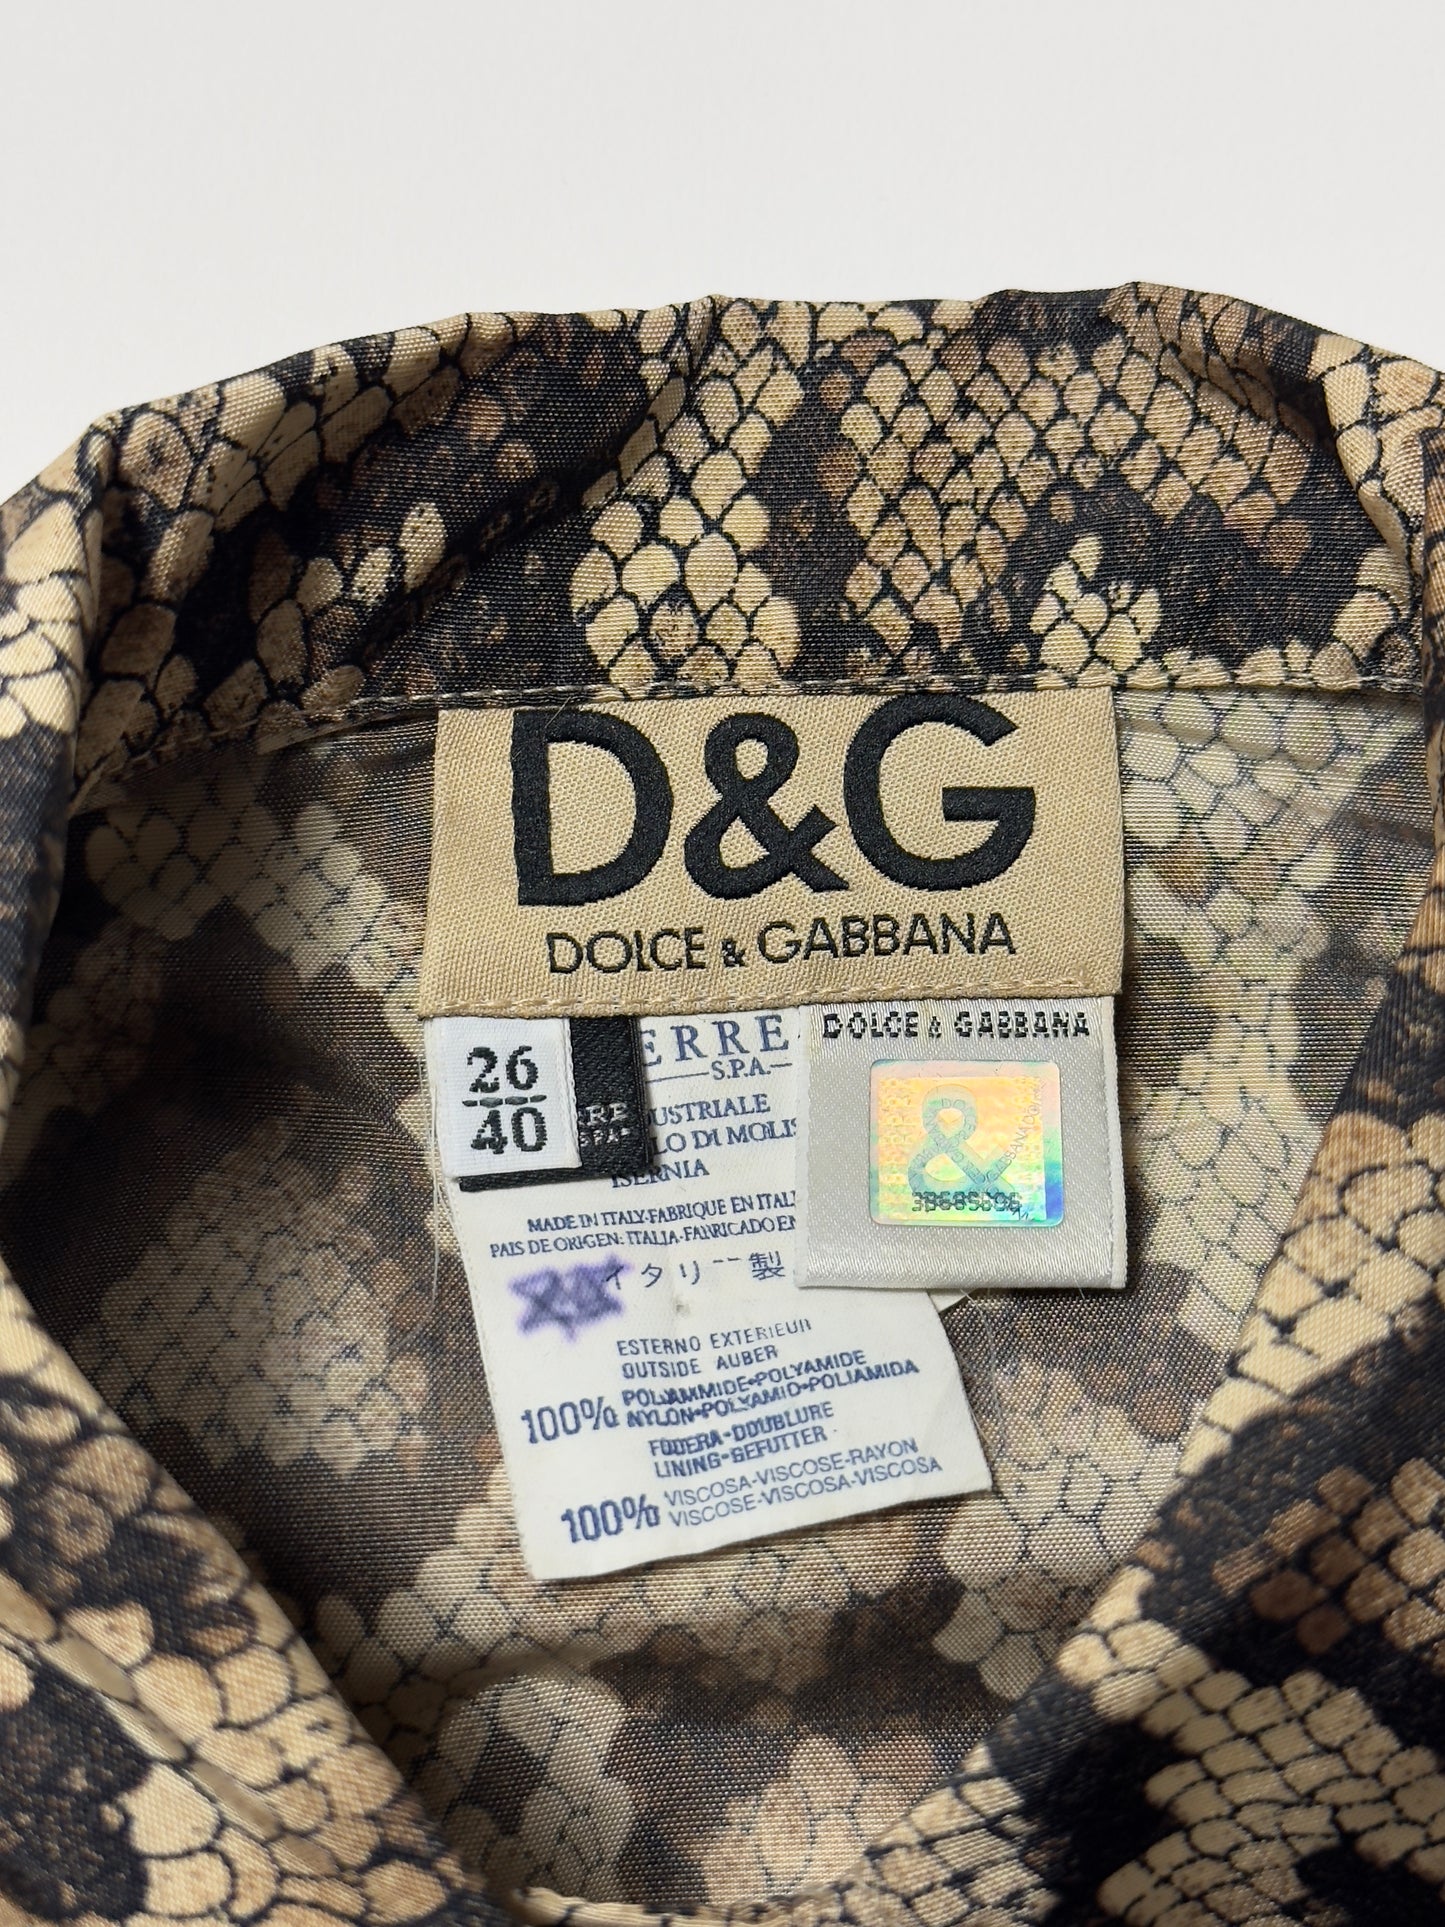 FW 2005 Dolce & Gabbana Snake Print Nylon Shirt